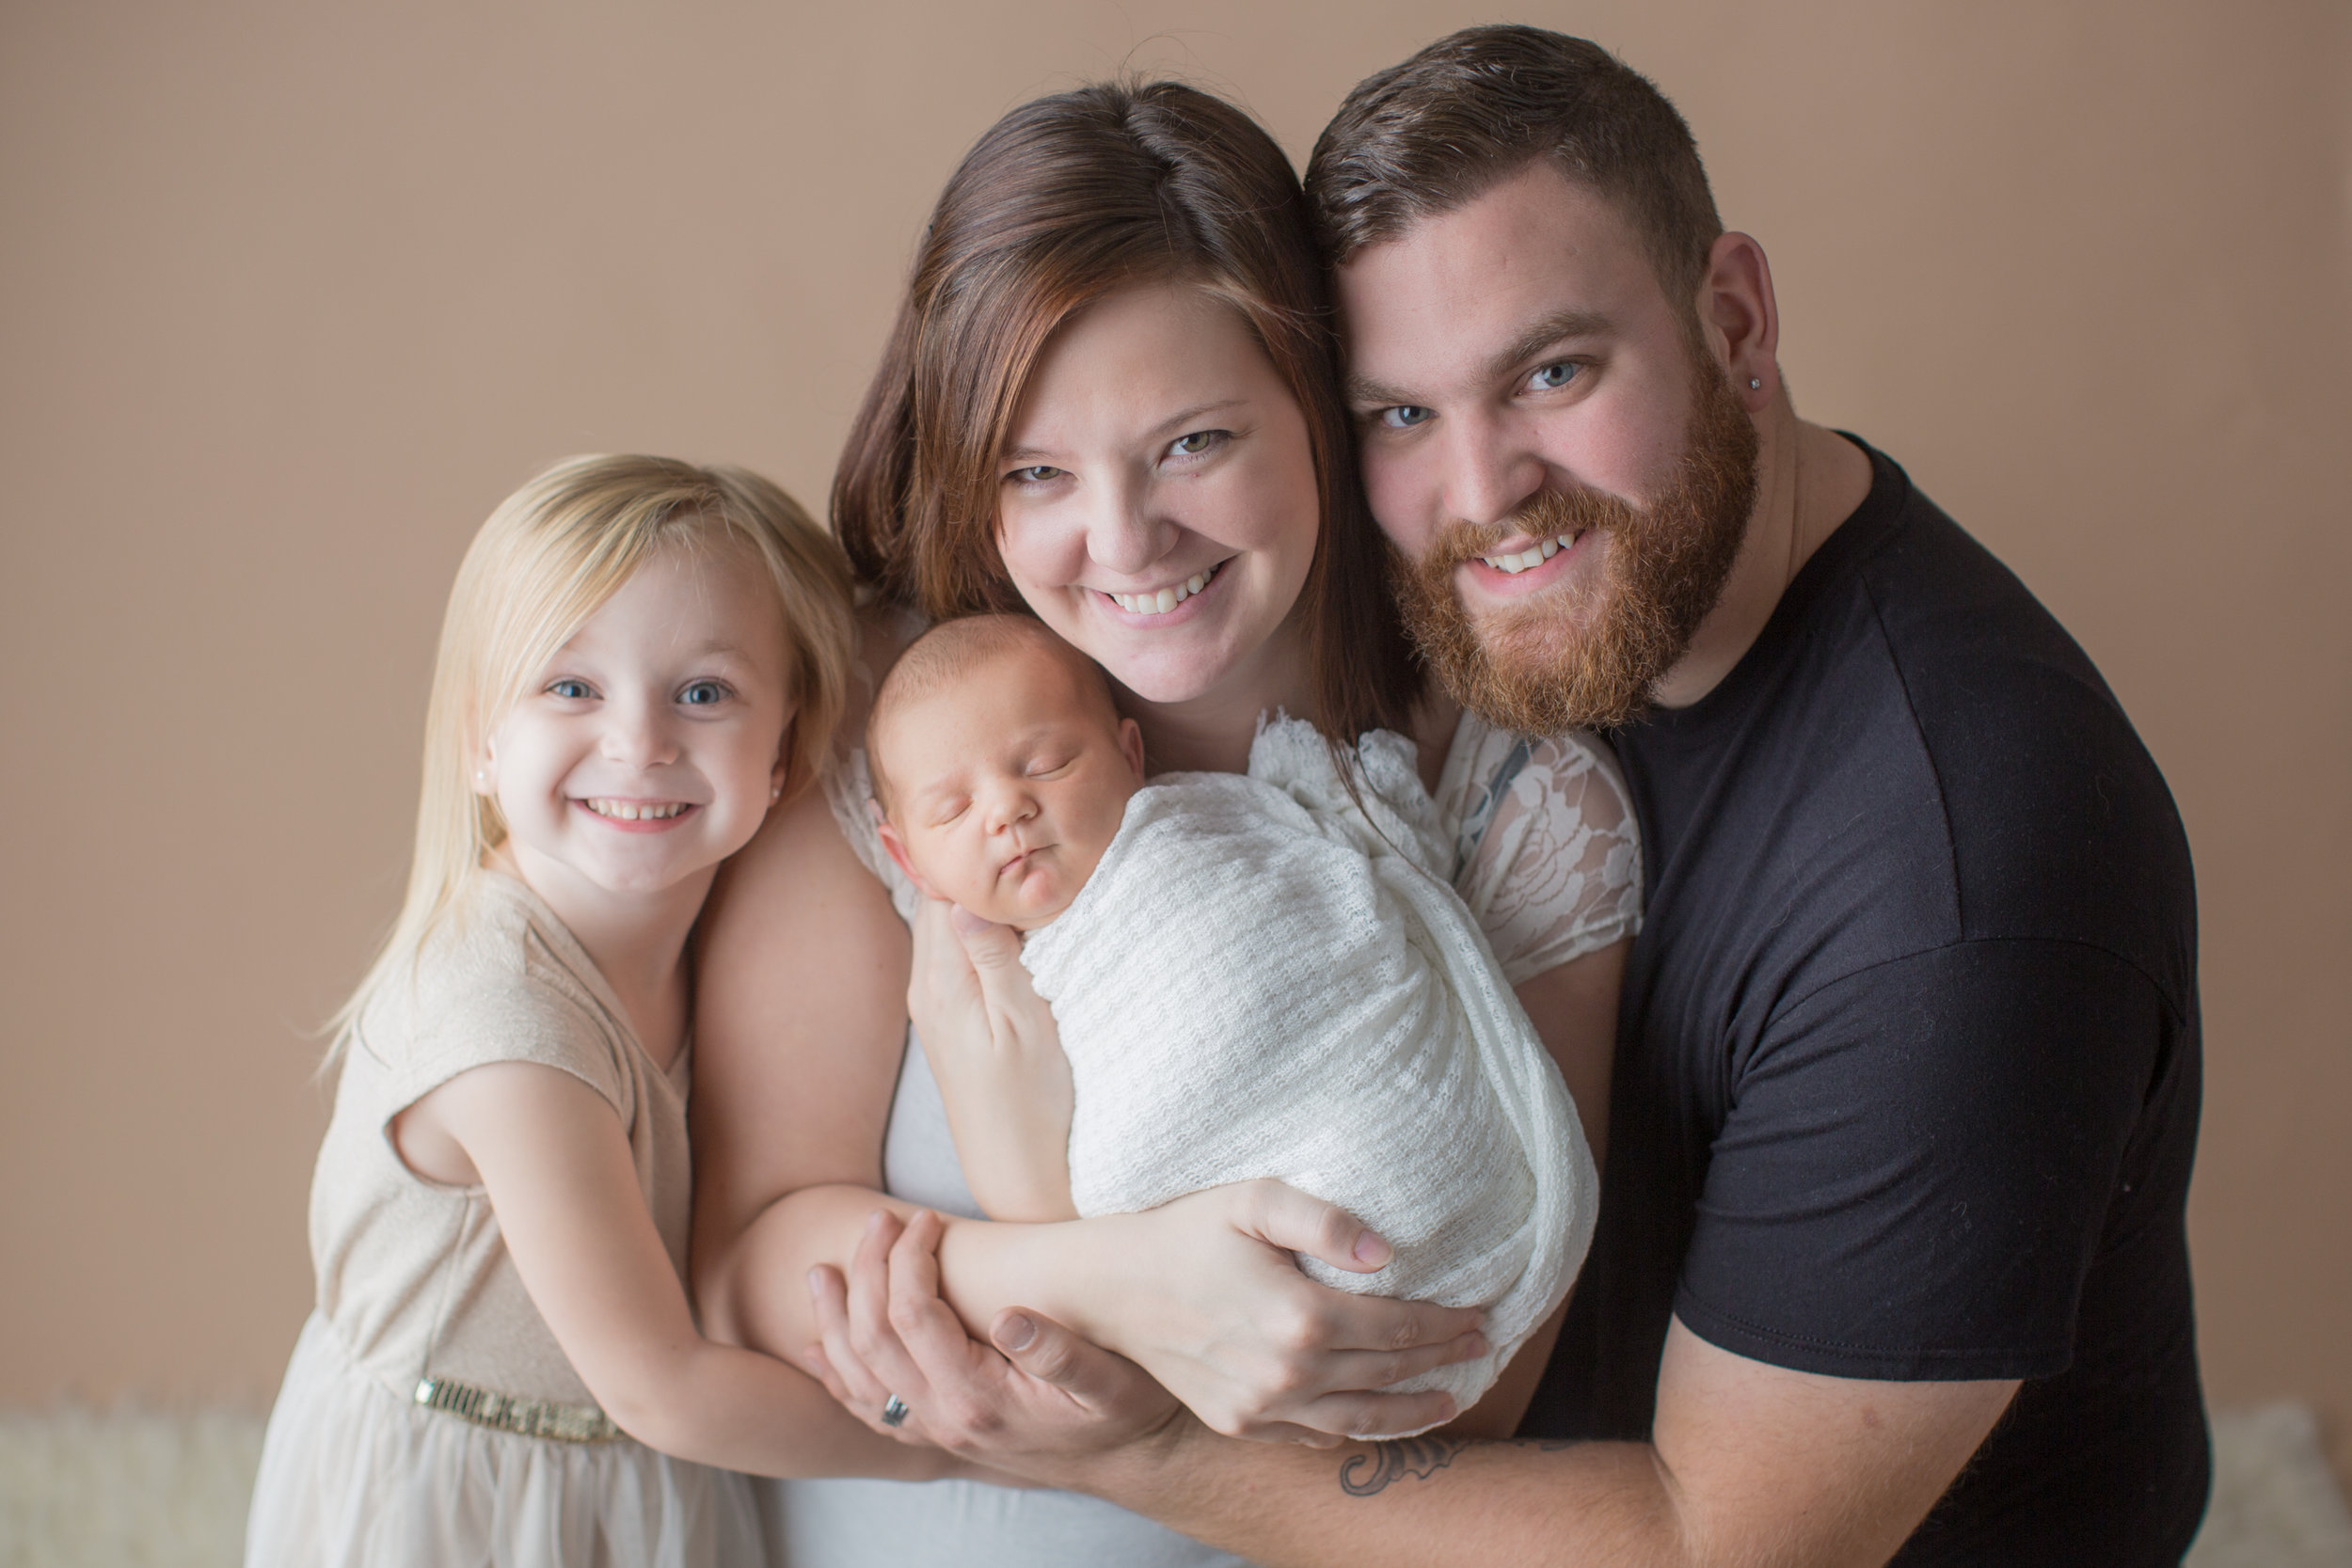  fenton portrait photography capturing family portraits with newborn baby 